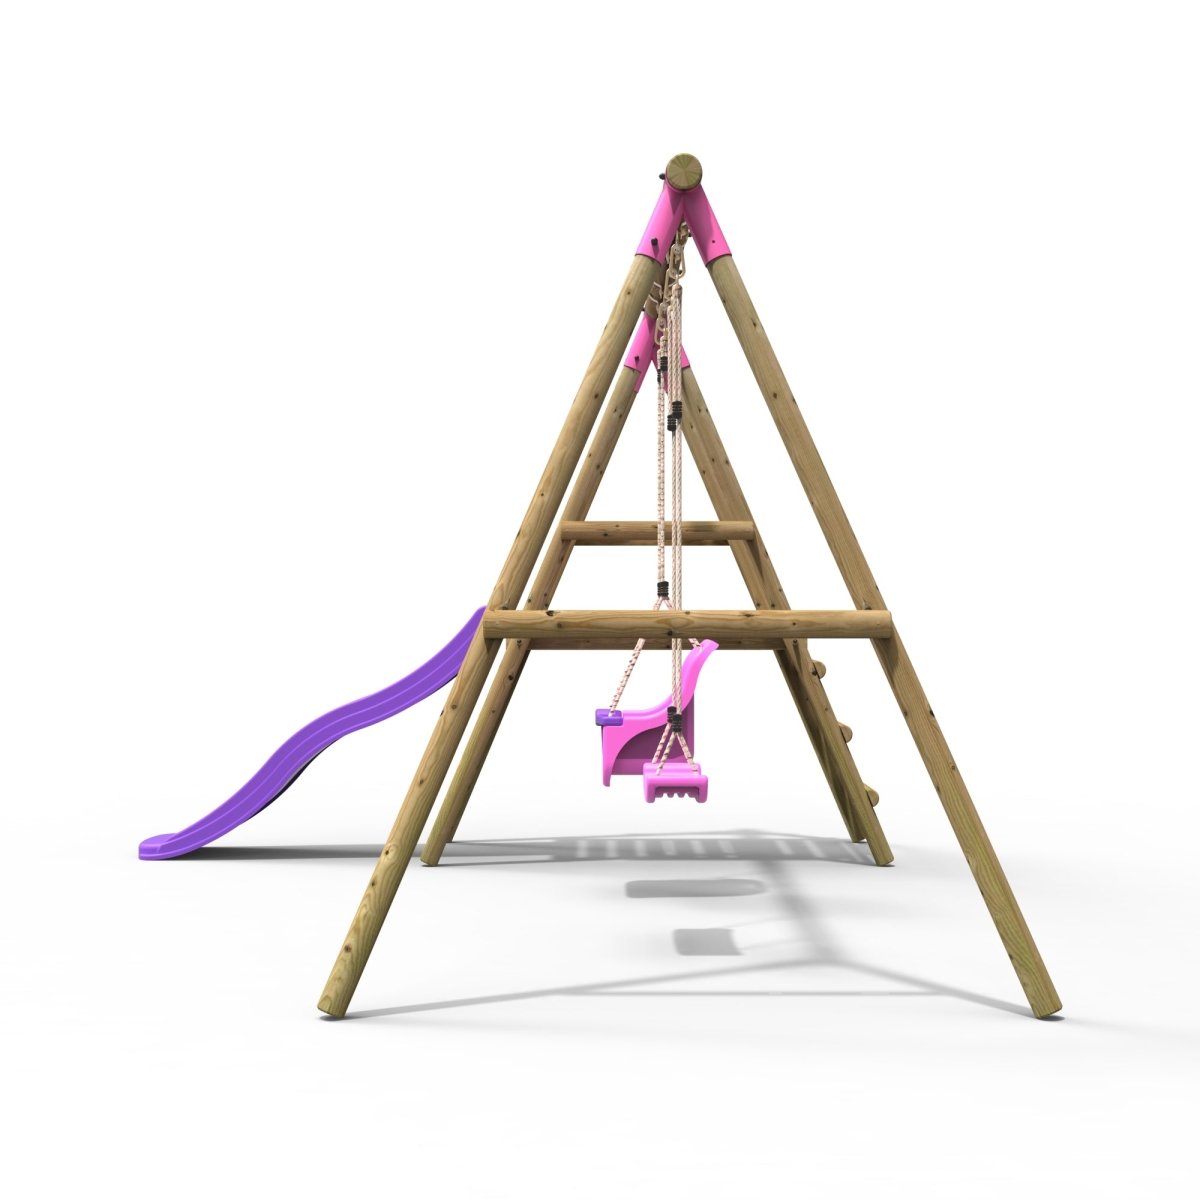 Rebo Odyssey Wooden Swing Set with Platform and Slide - Pink